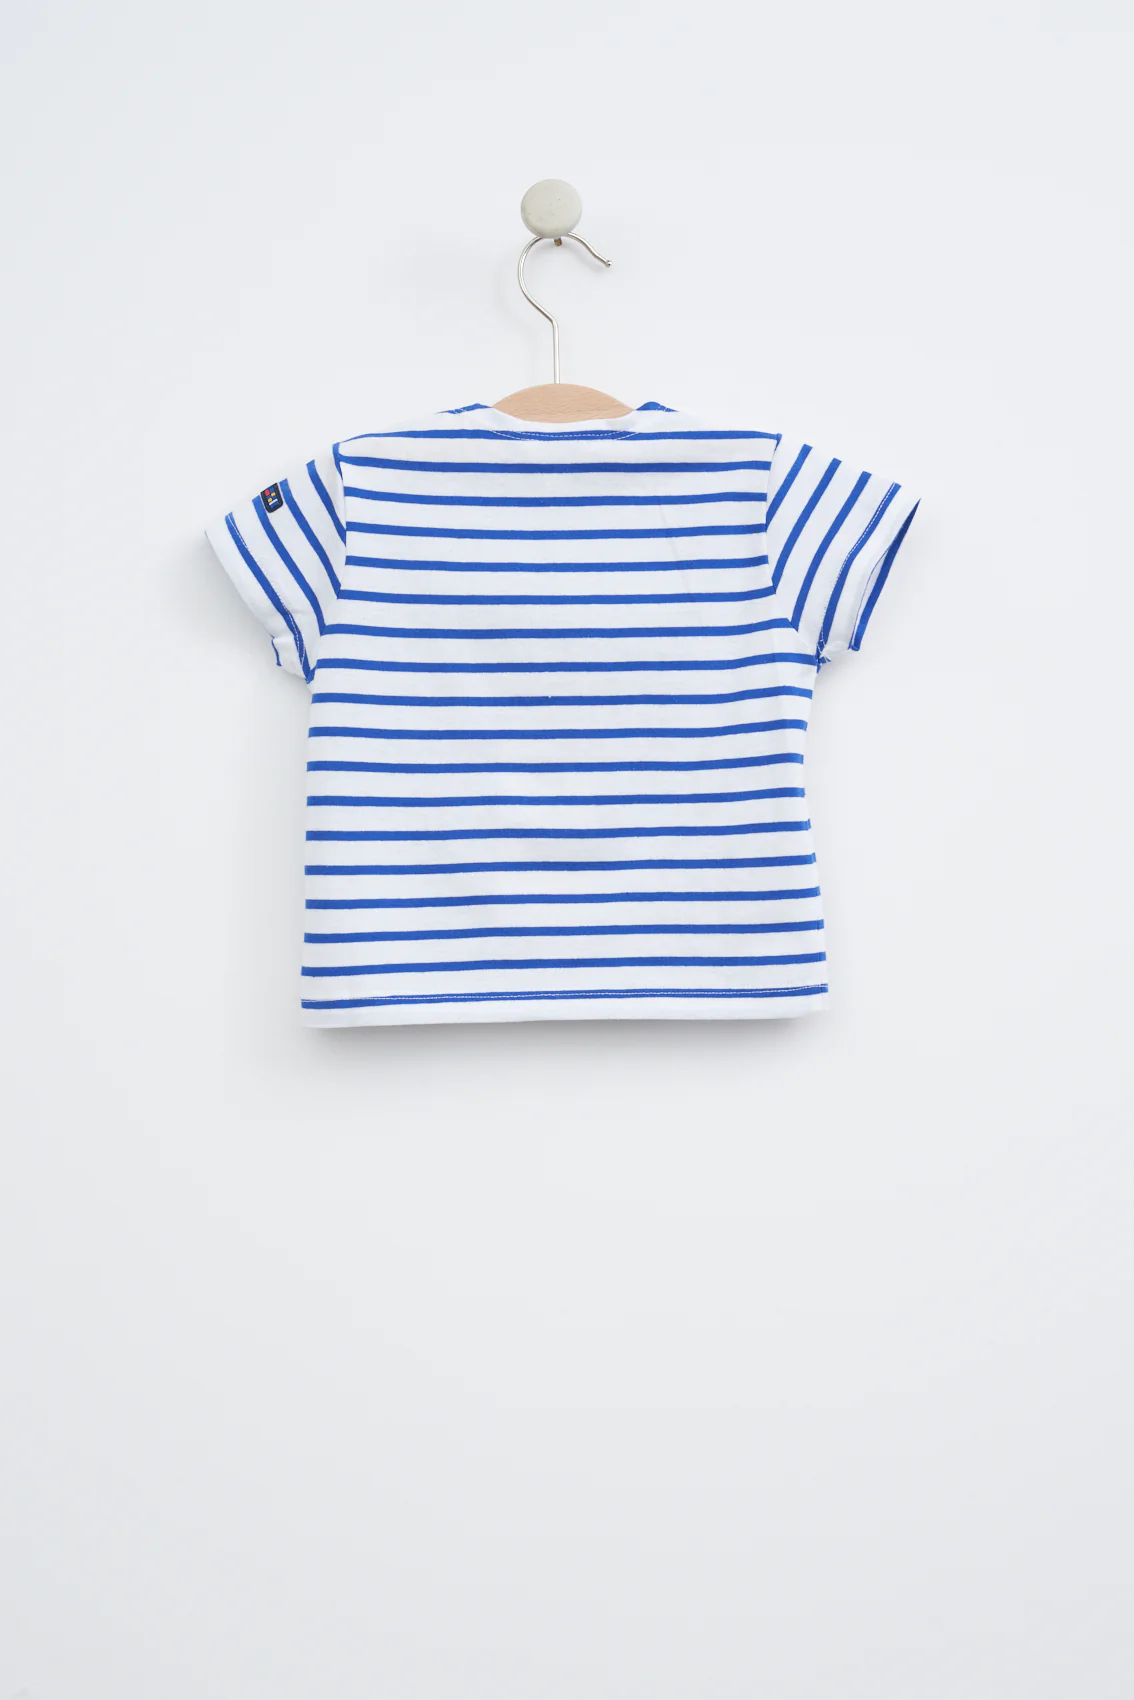 Batela Short Sleeve Blue Striped T-Shirt